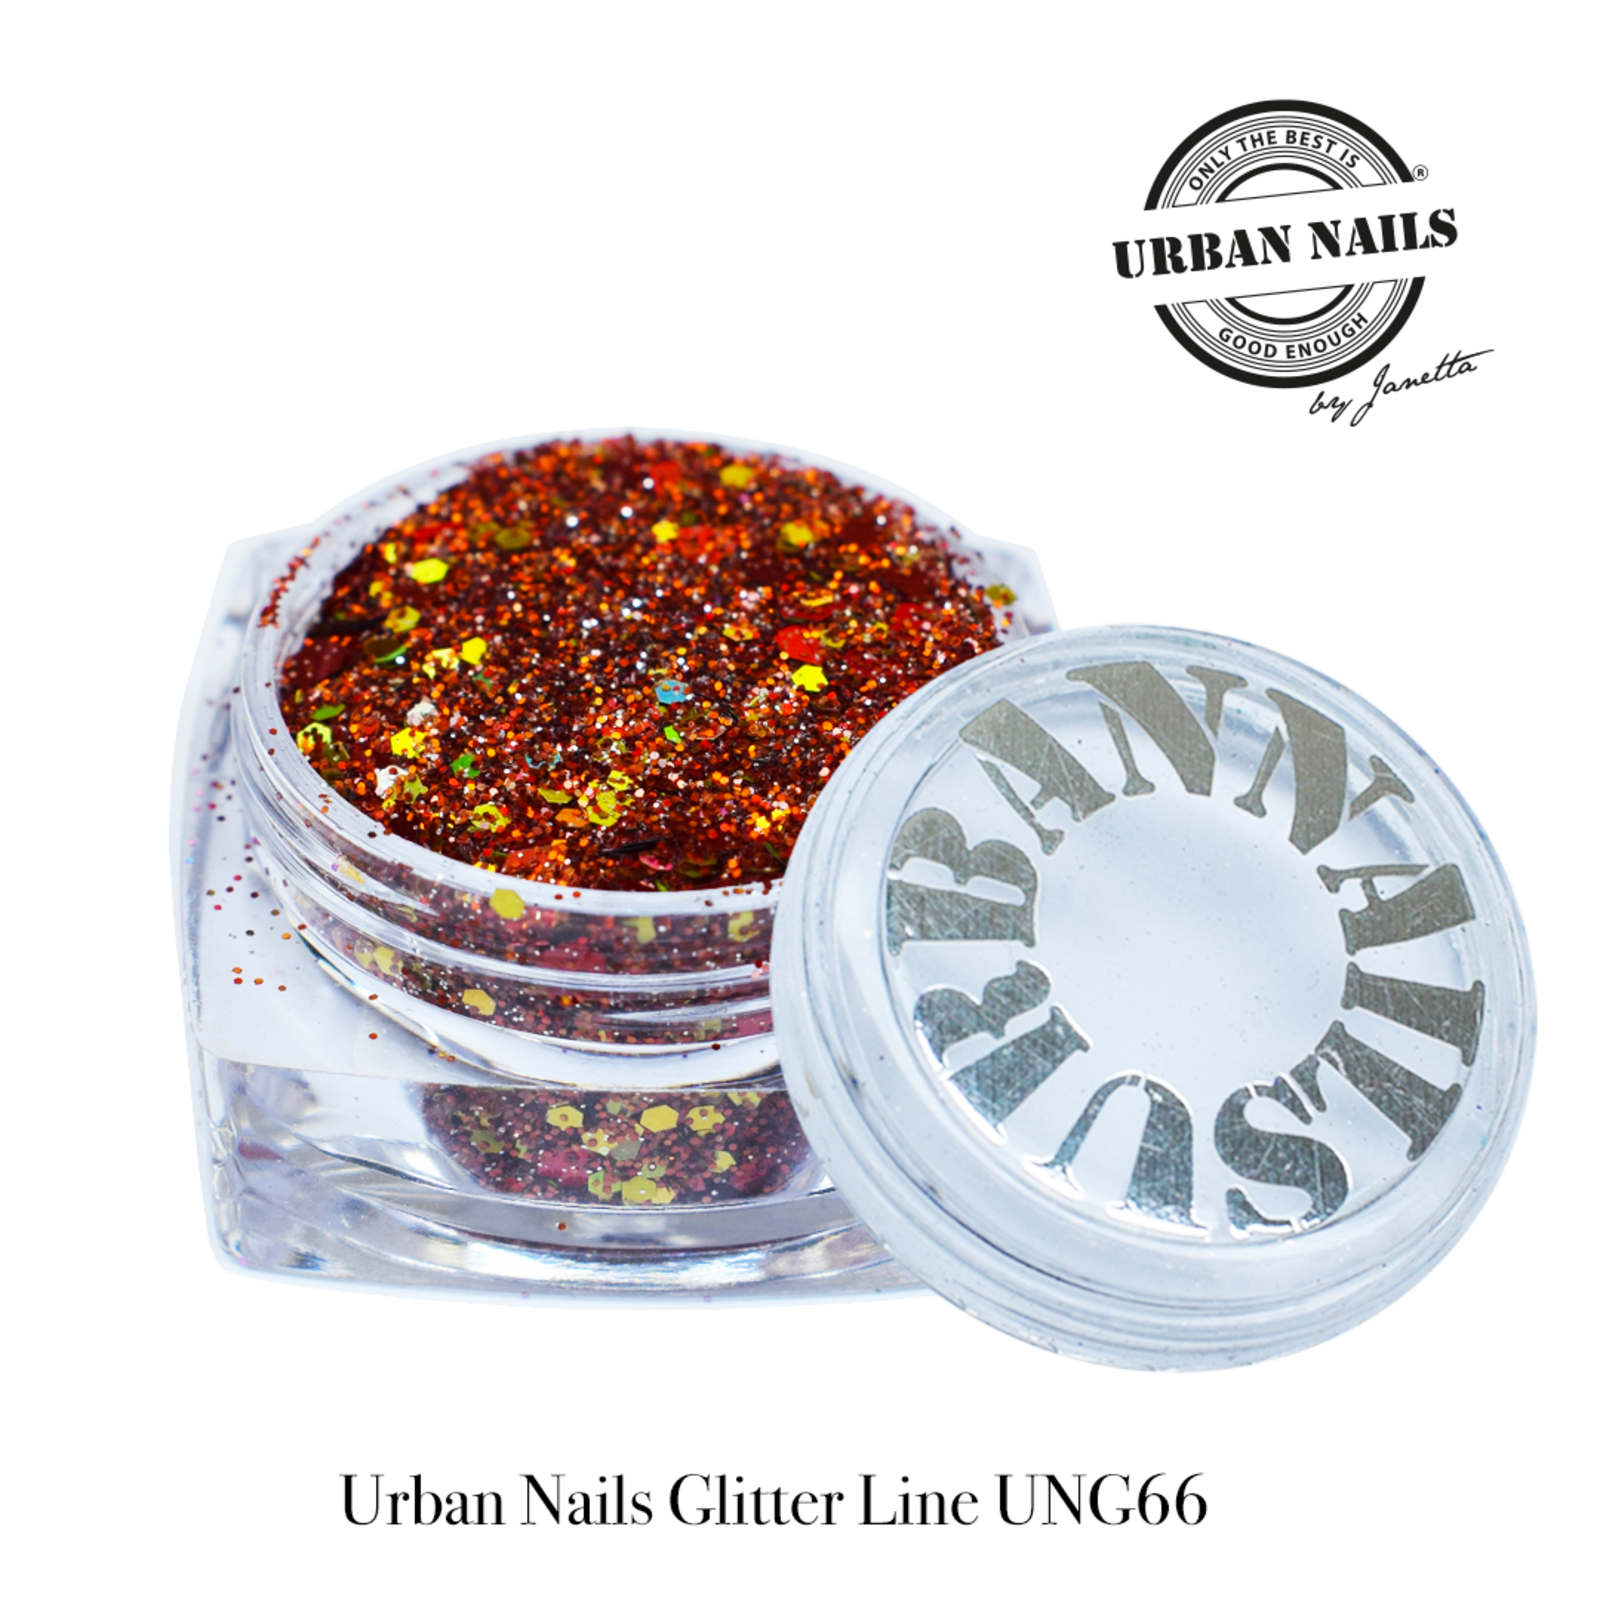 Urban nails Glitter Line  UNG66